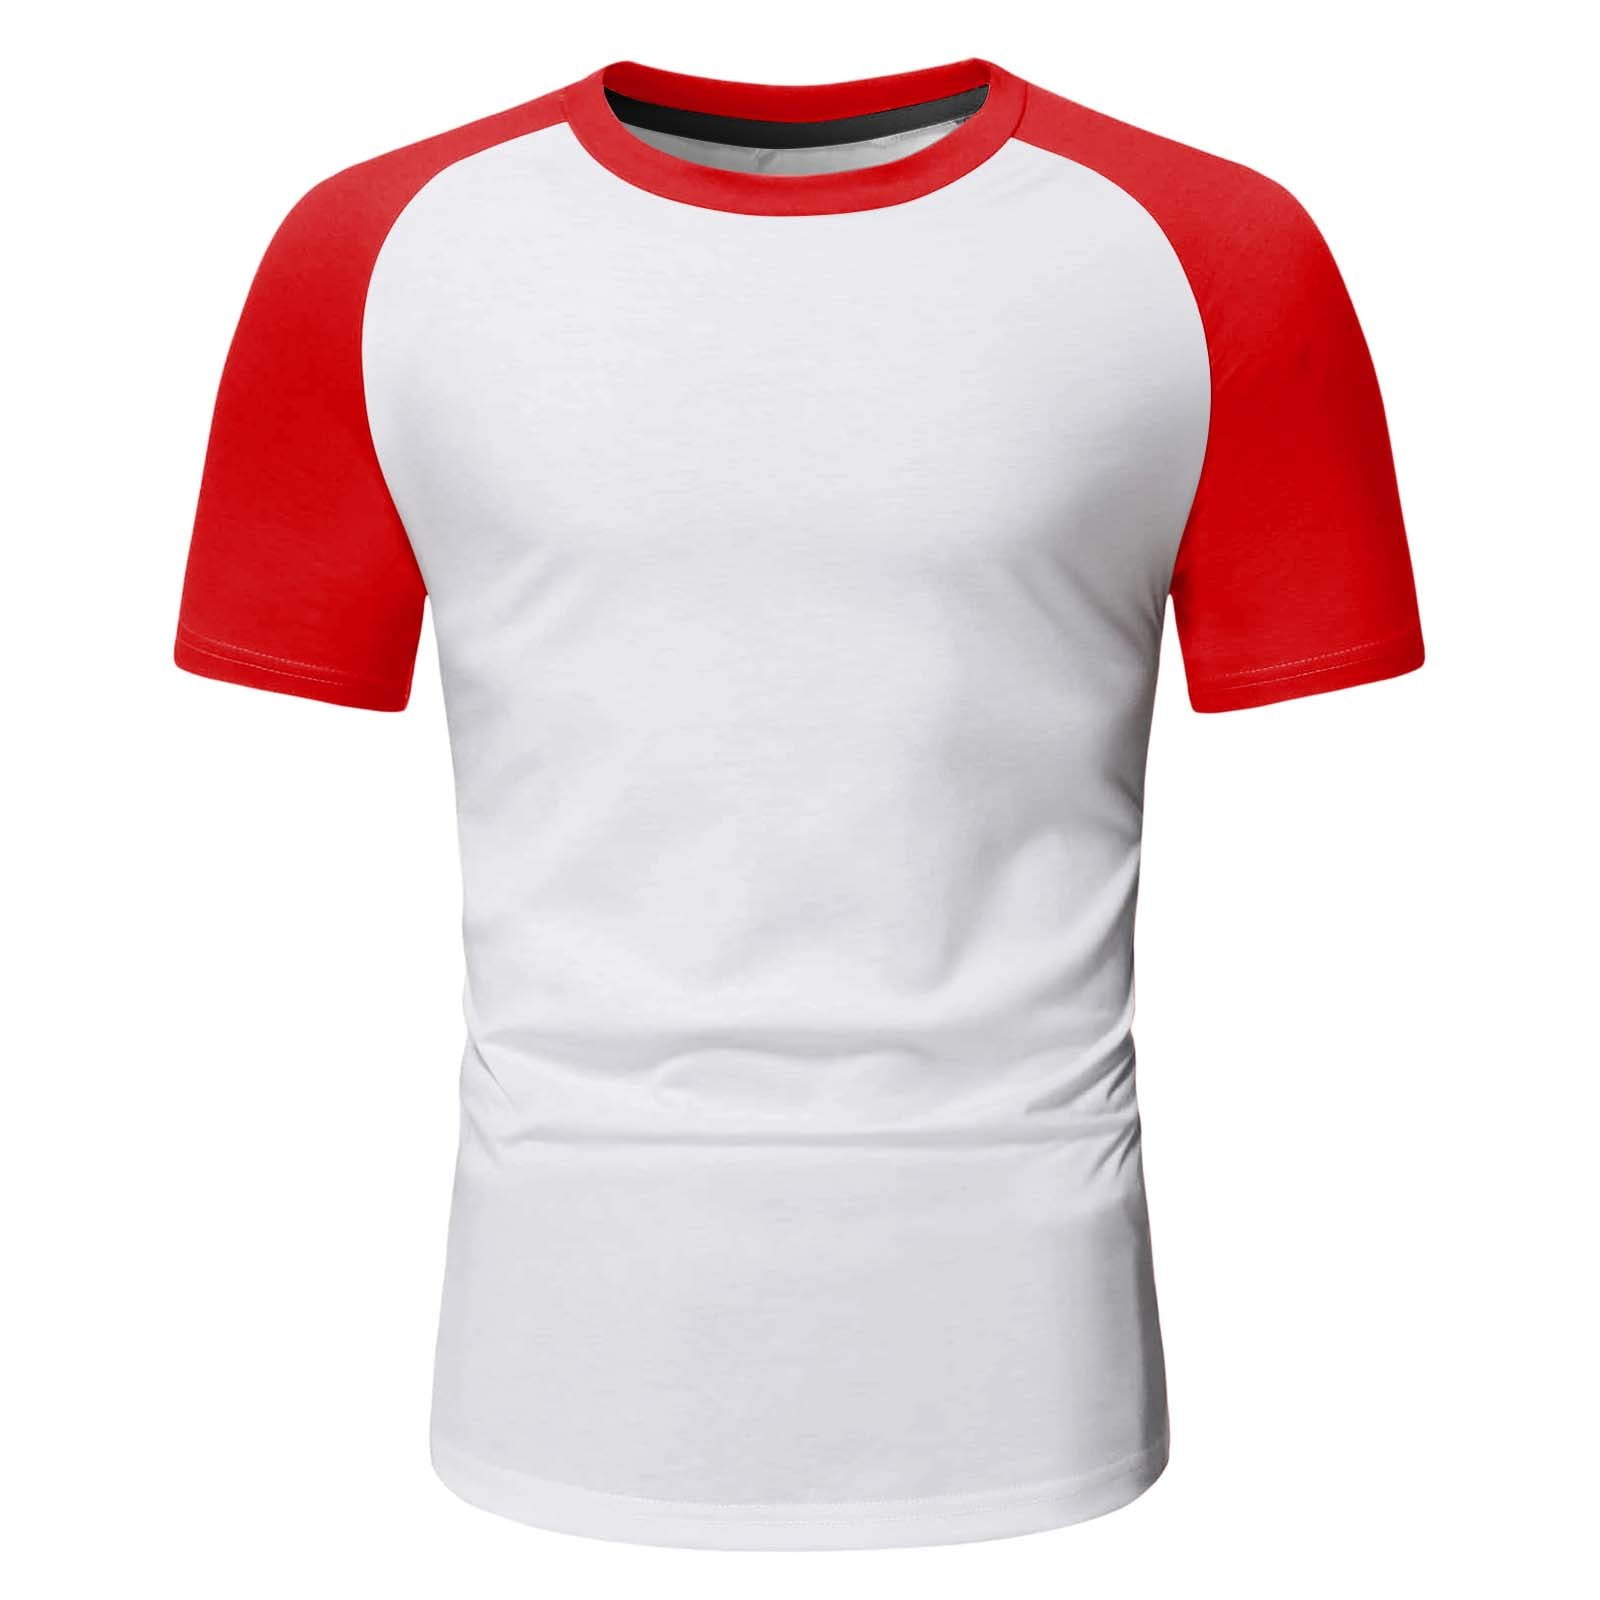 kpoplk Mens T Shirt,T Shirts Men Short Sleeve Graphic Casual